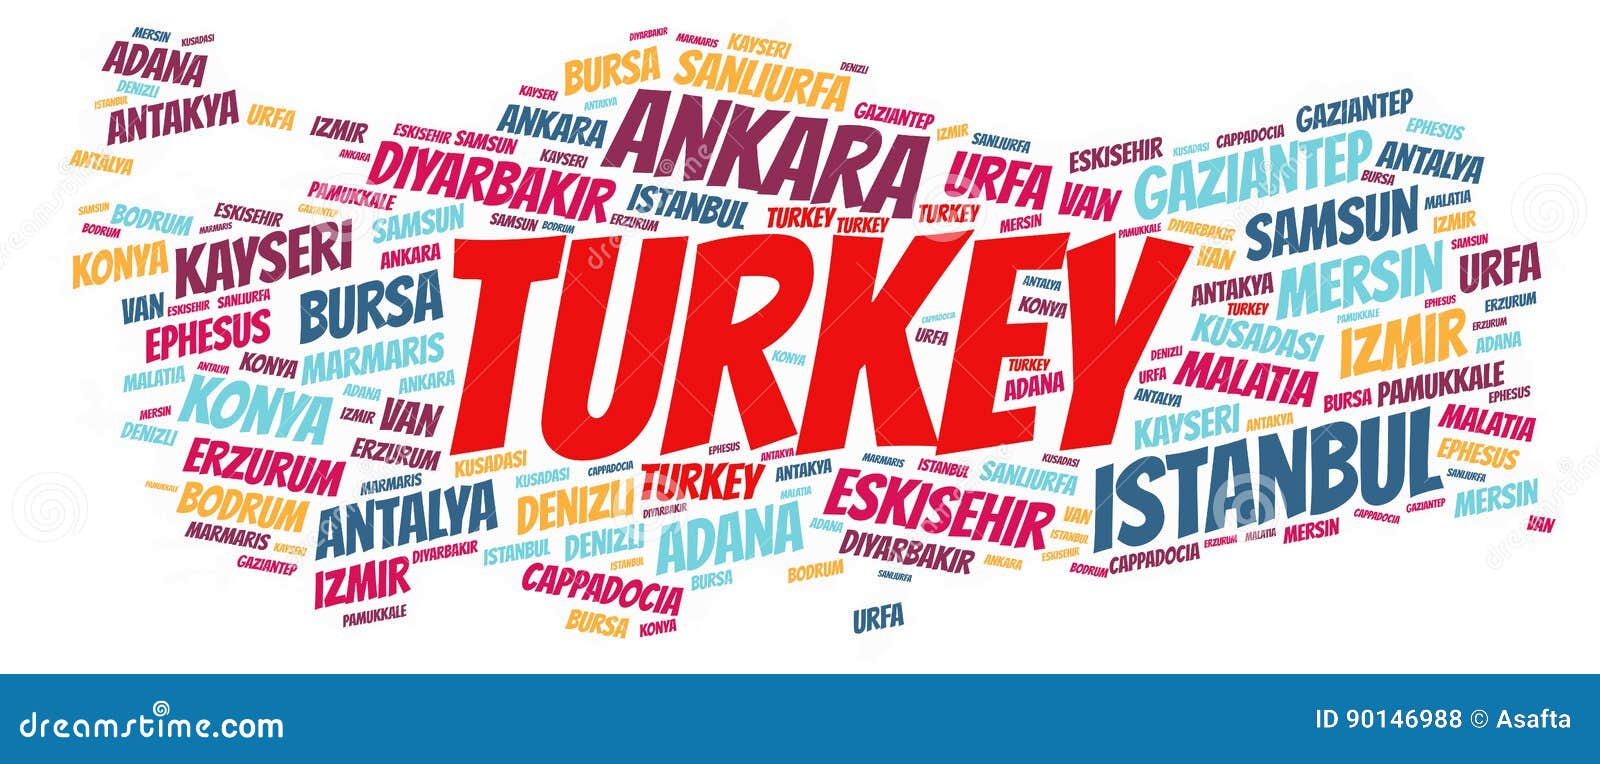 turkey top travel destinations word cloud